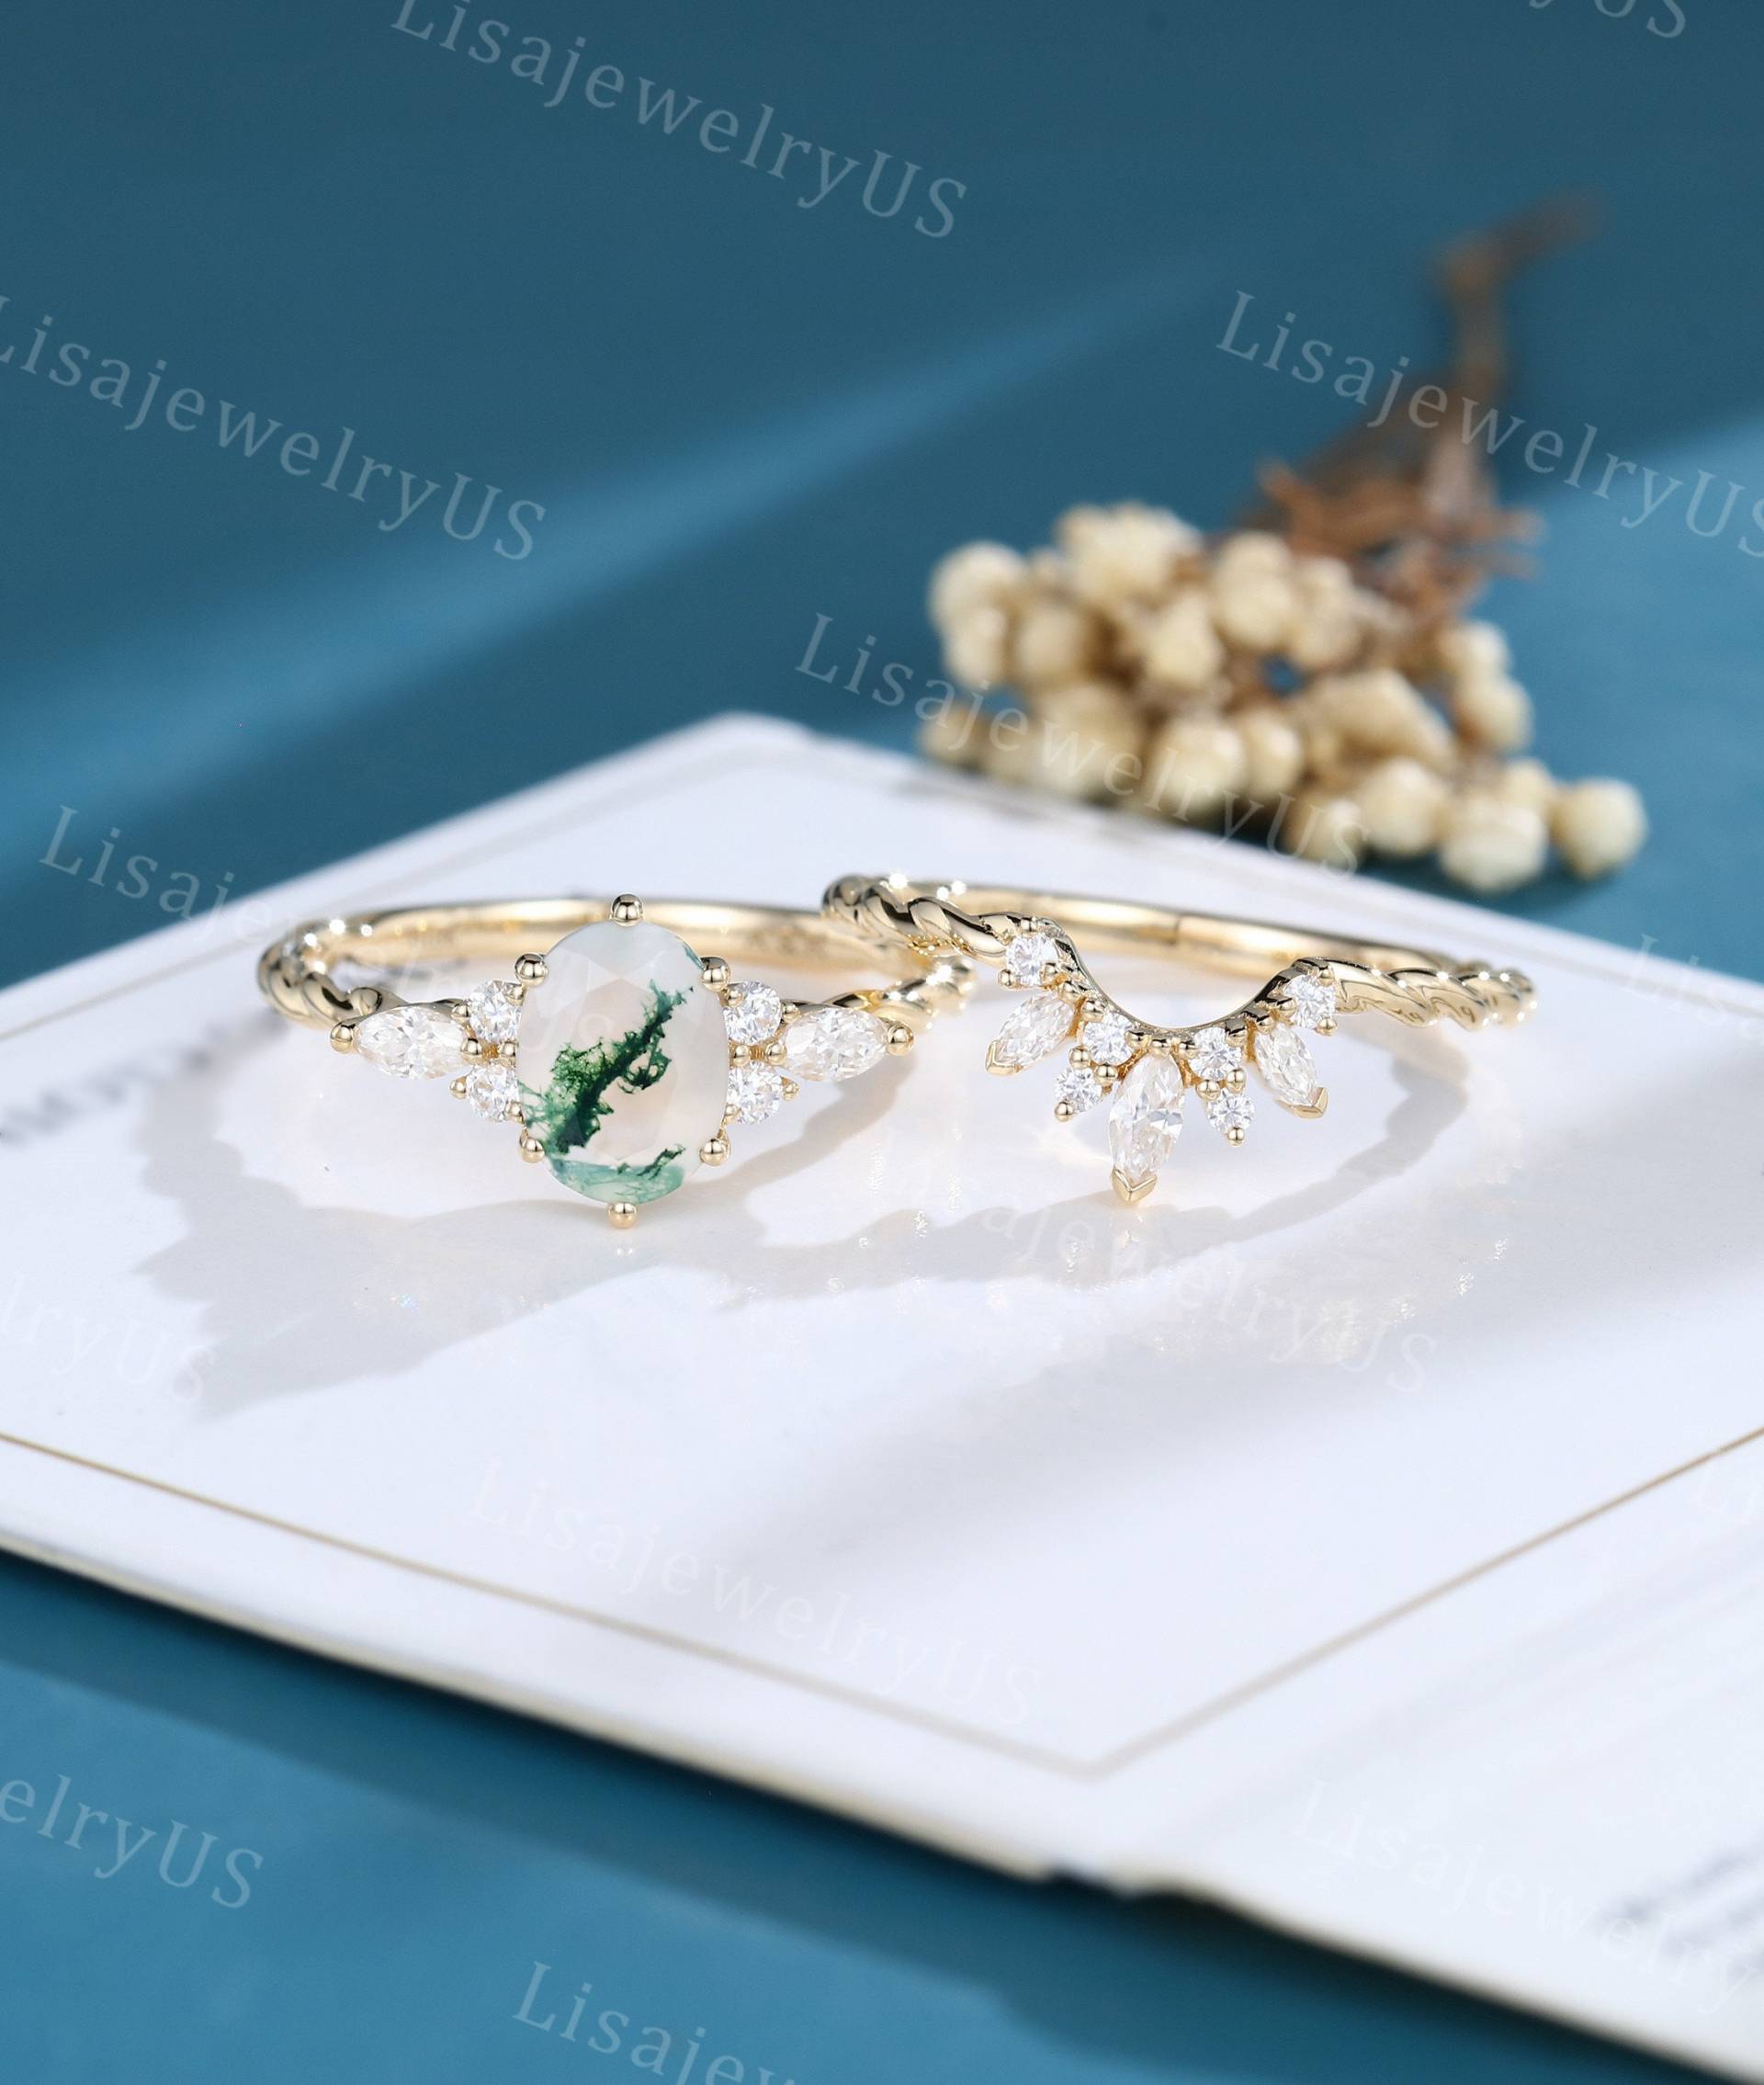 Ovales Moosachat-Verlobungsring-Set, Gelbgold-Vintage-Verlobungsring-Set, Art-Deco-Diamant, 3/4 Ewigkeit, Gedrehtes Braut-Verlobungsring-Set von LisajewelryUS